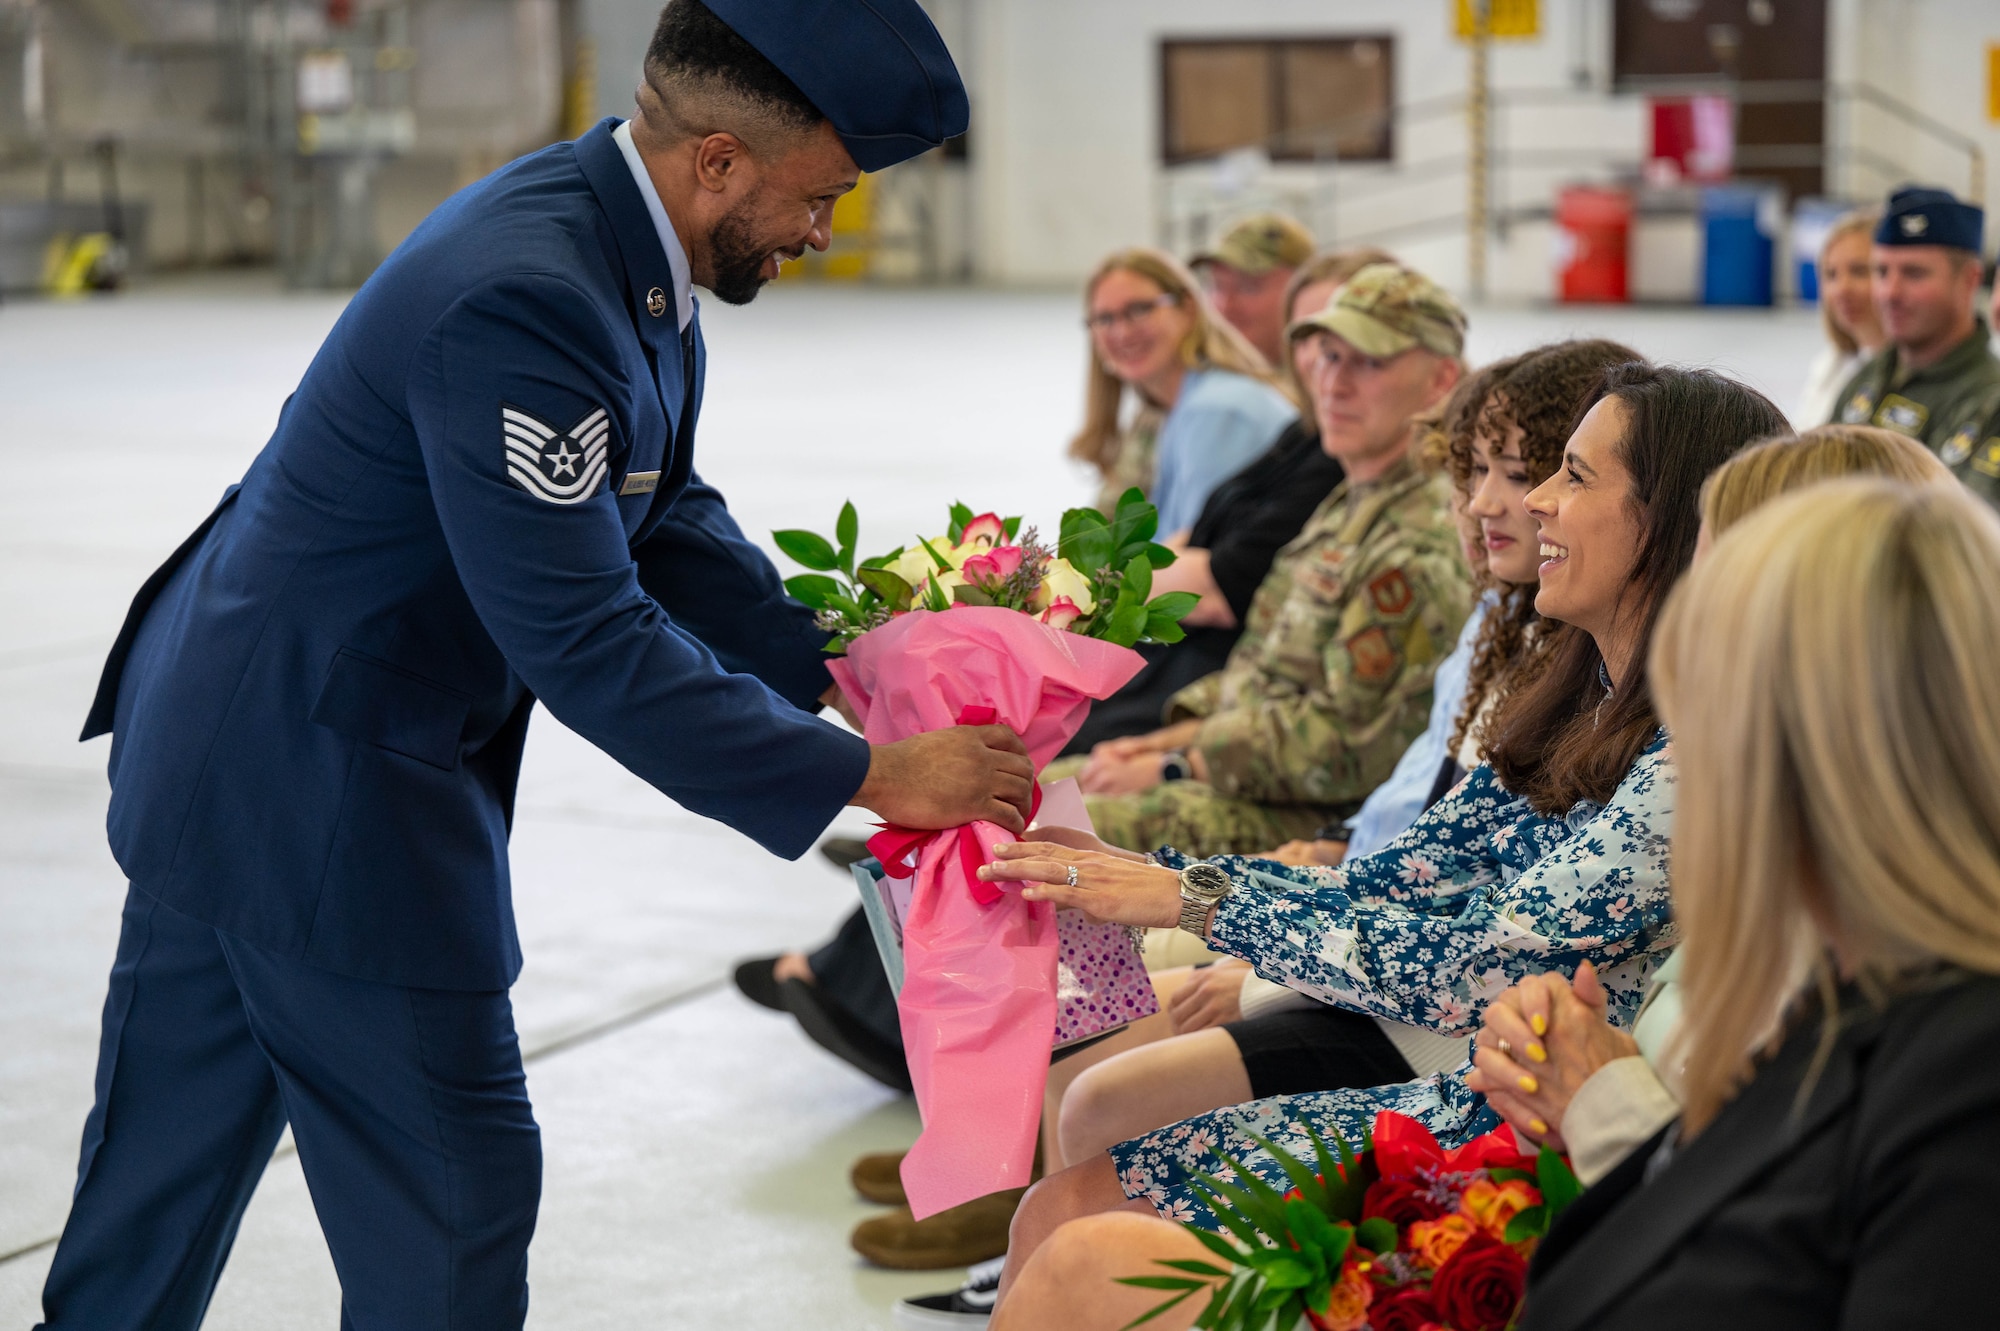 Airmen deliver gifts